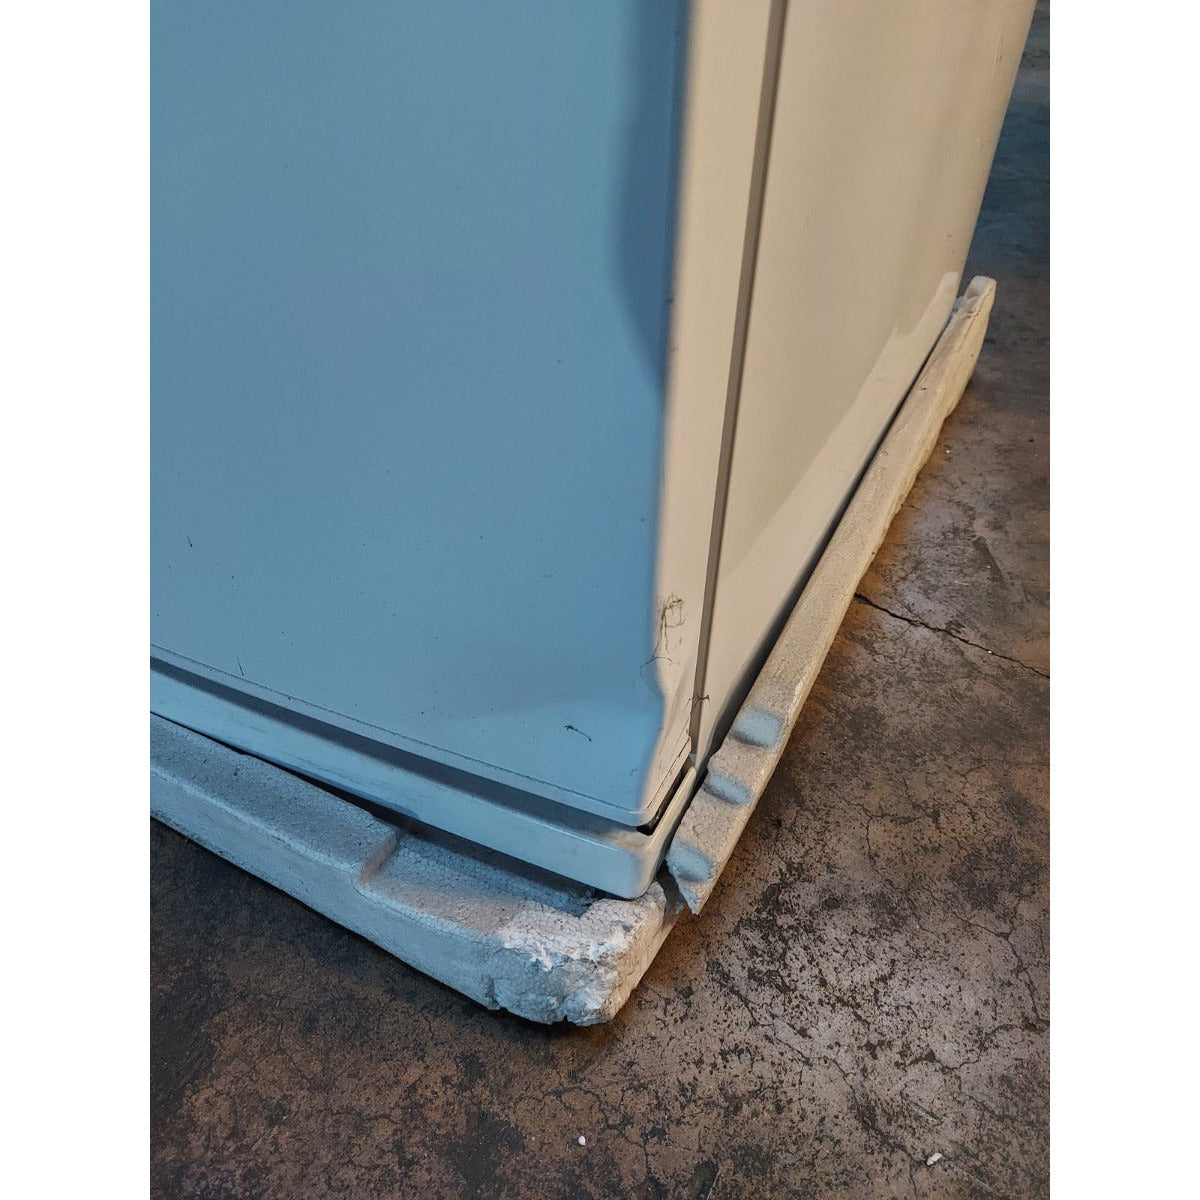 Lec PSRC273UK - 273L Pharmacy Refrigerator - Solid Door  -CLEARANCE